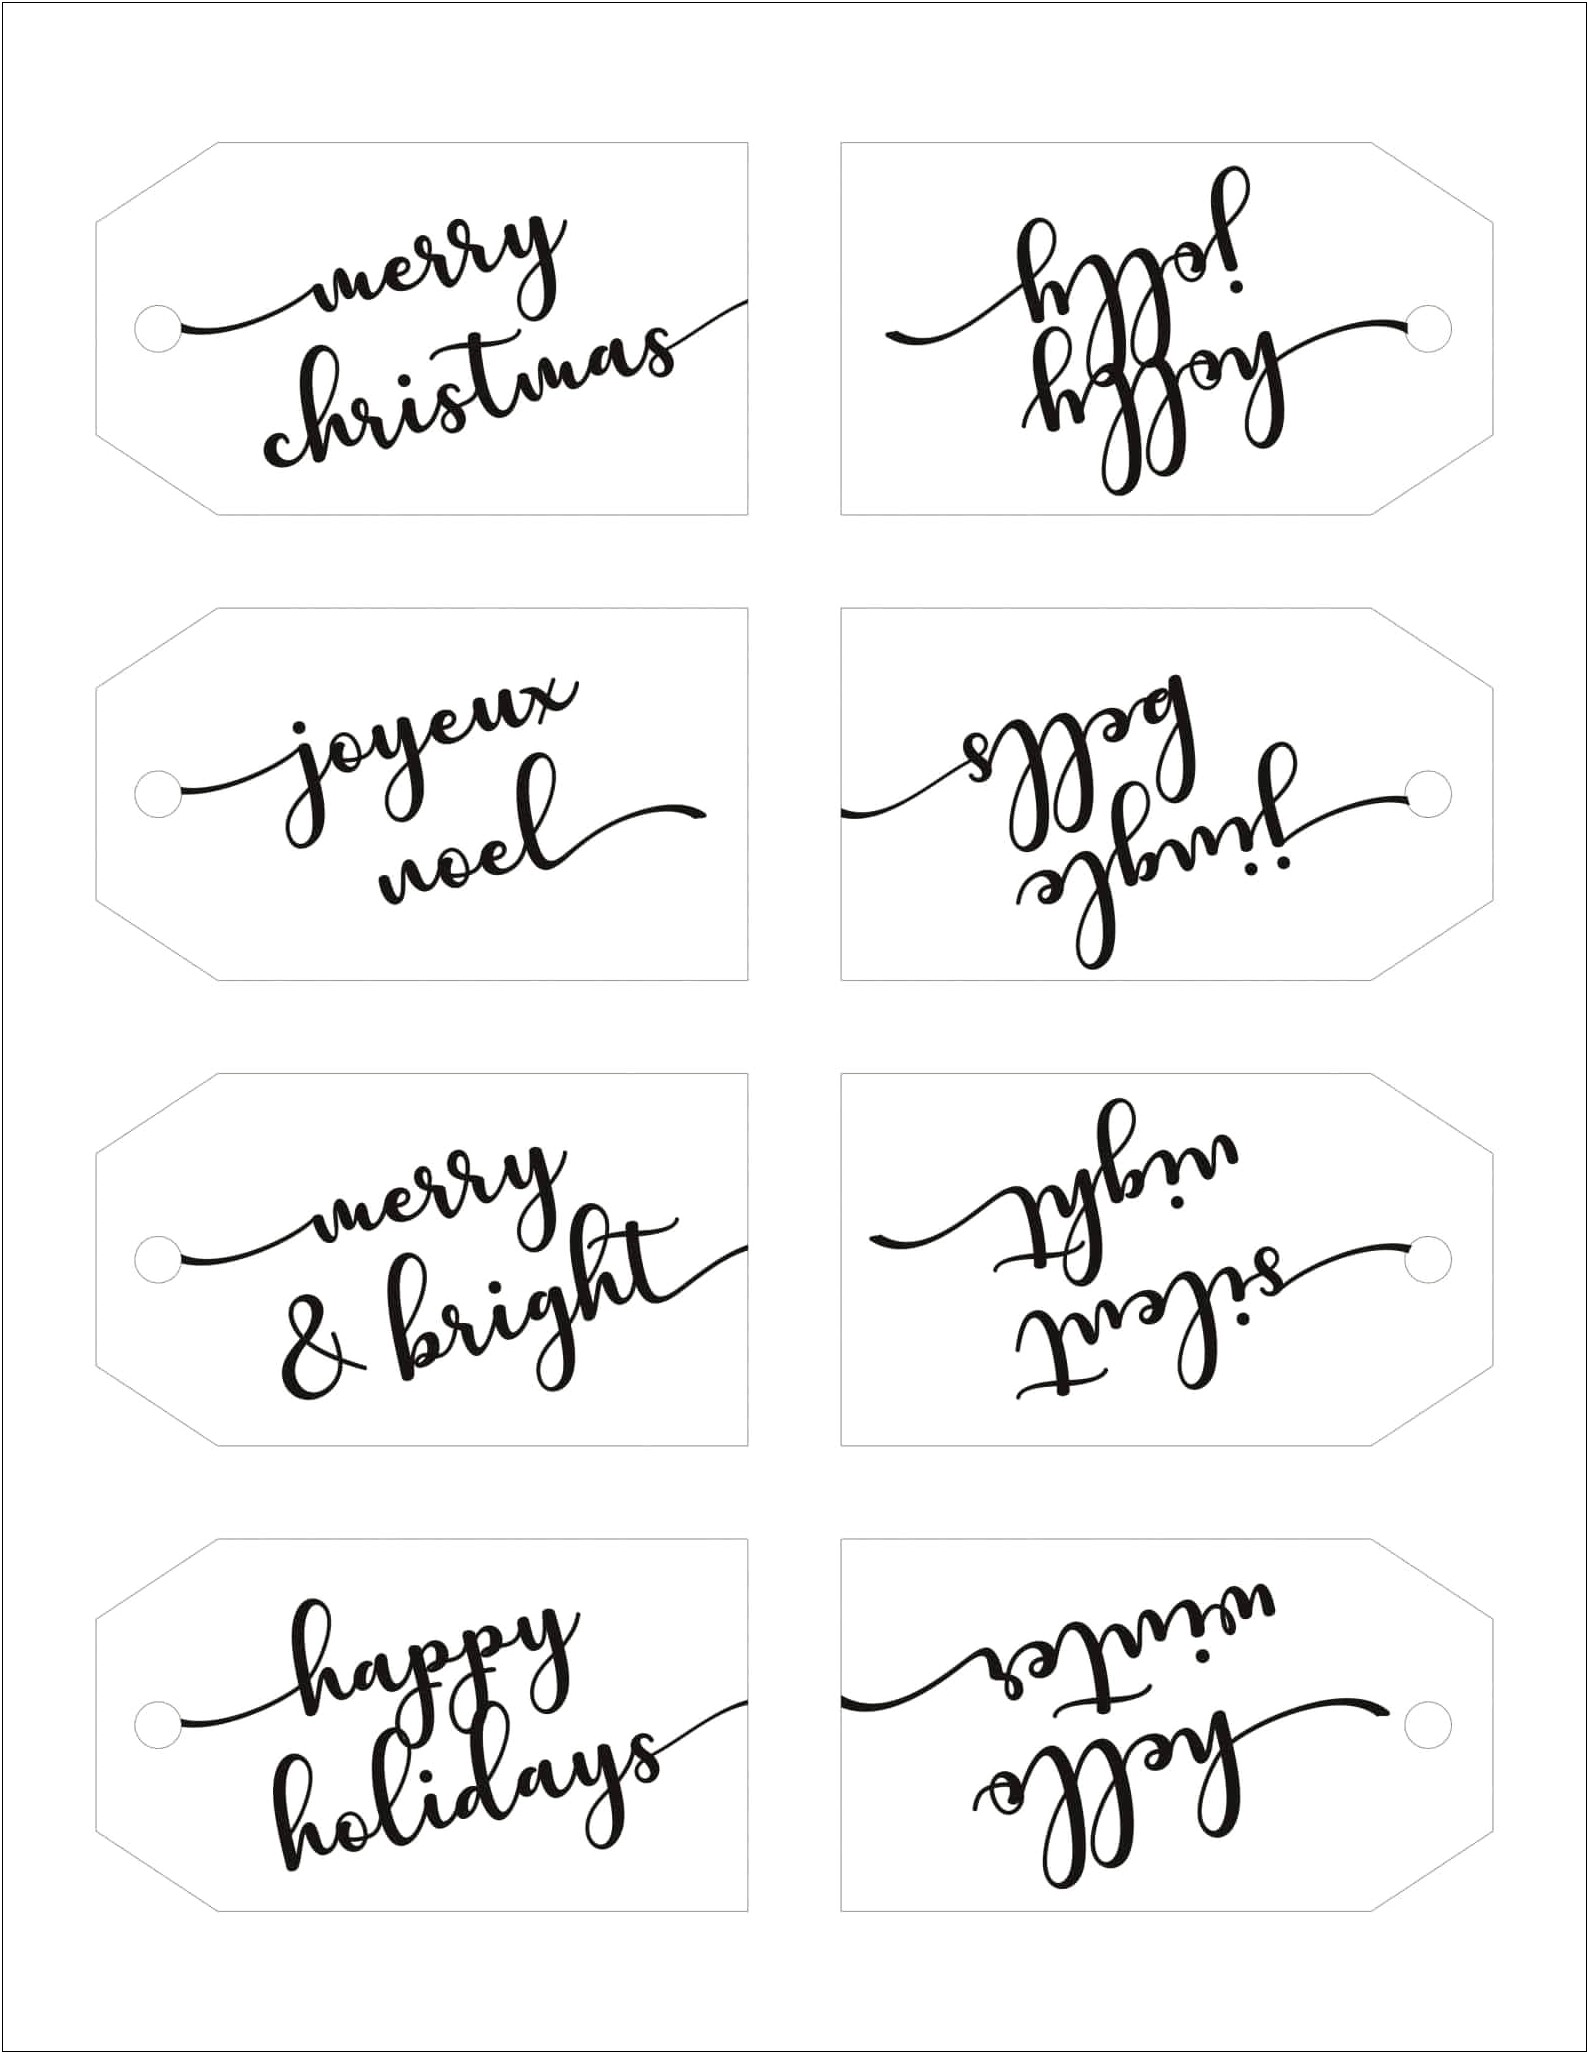 Free Printable Christmas Tags Templates Black And White